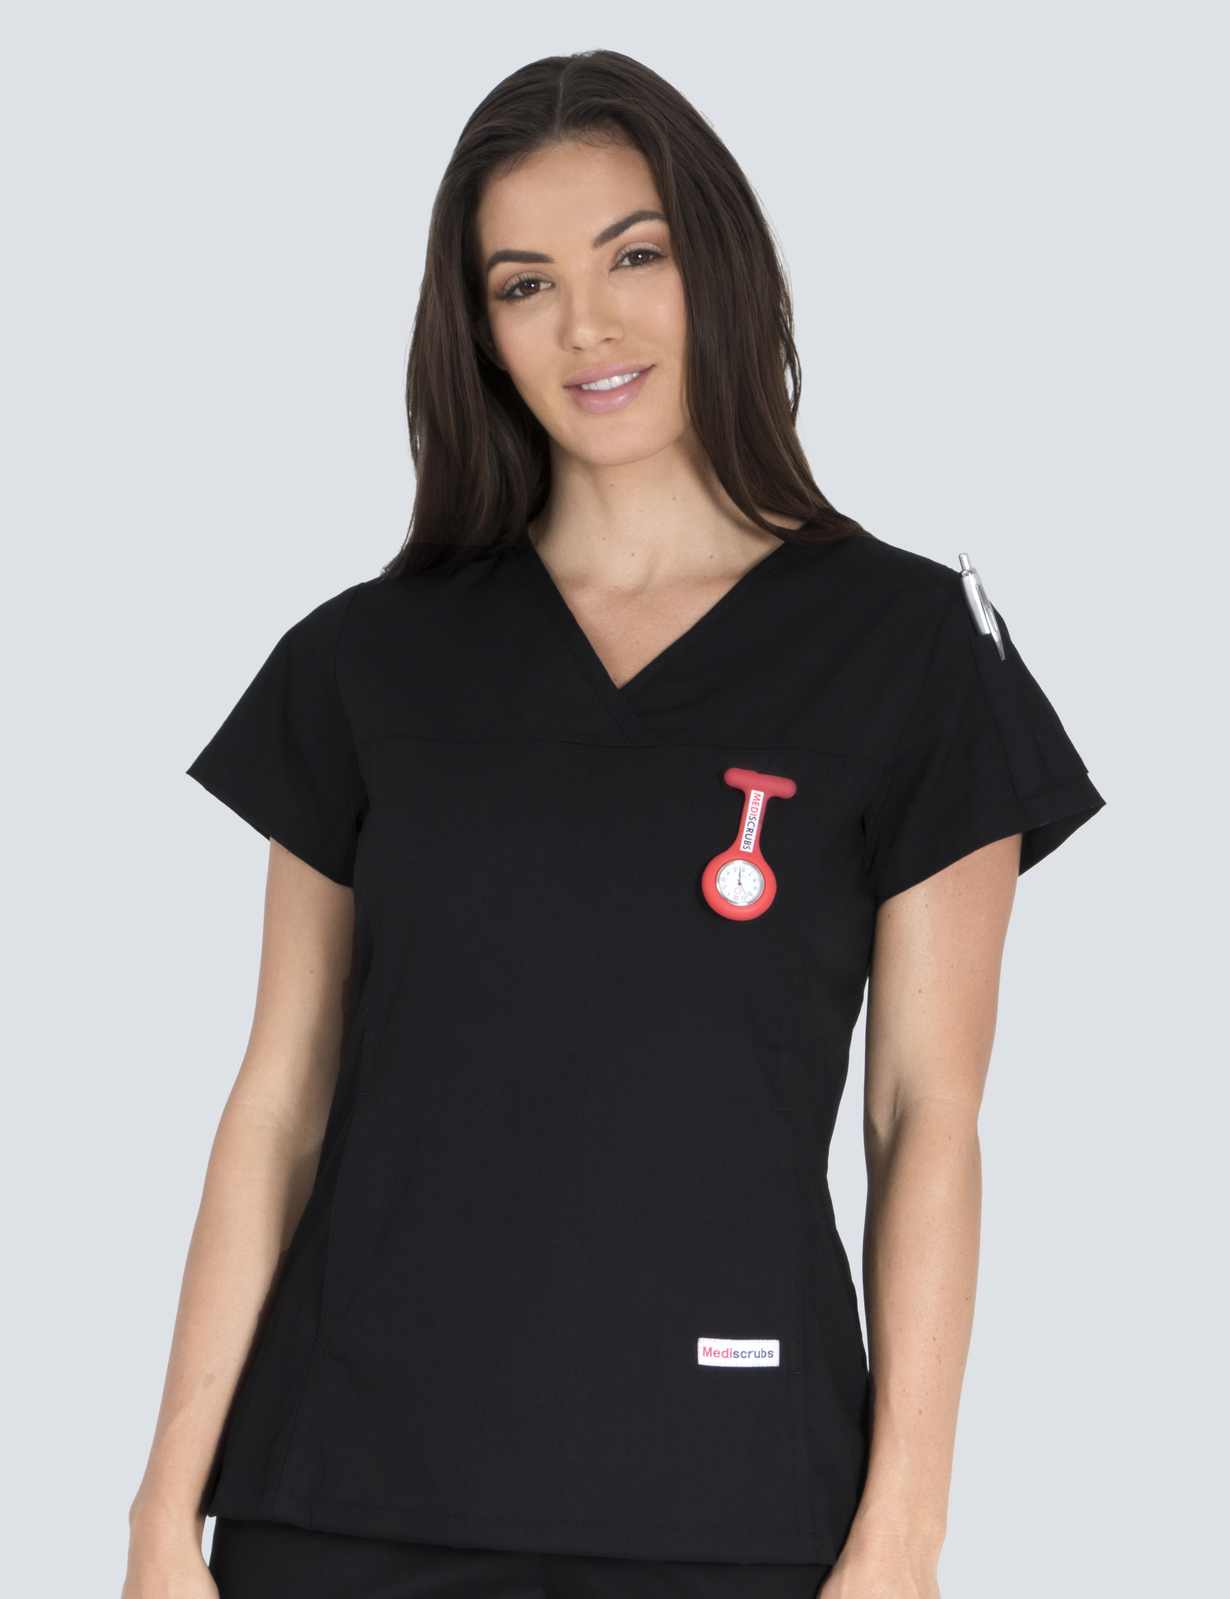 Queensland Children's Hospital Emergency Department Clinical Nurse  Uniform Top Bundle  (Women's Fit Top in Burgundy  incl Logos)